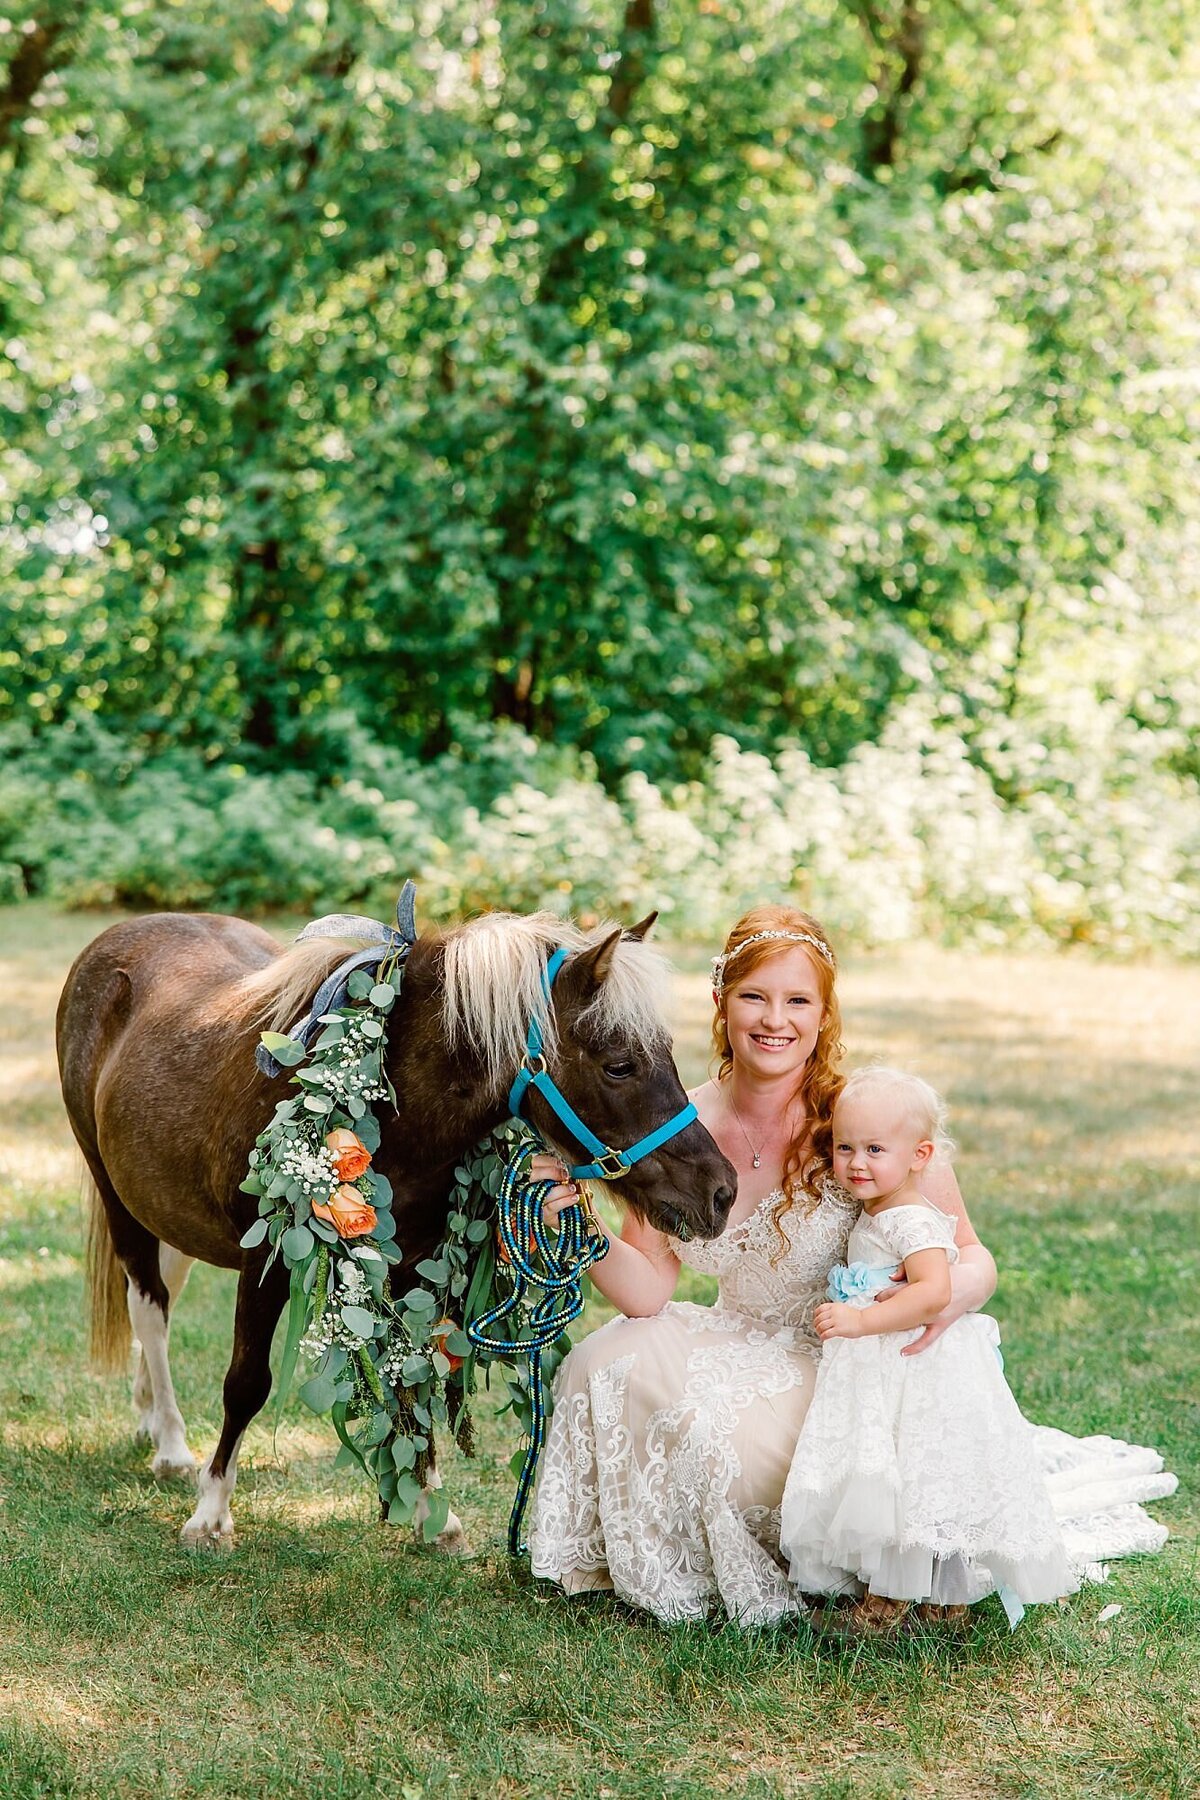 AmberLangerudPhotography_Summertime Milts Barn Wedding, Pelican Rapids, MN with Horses_1754